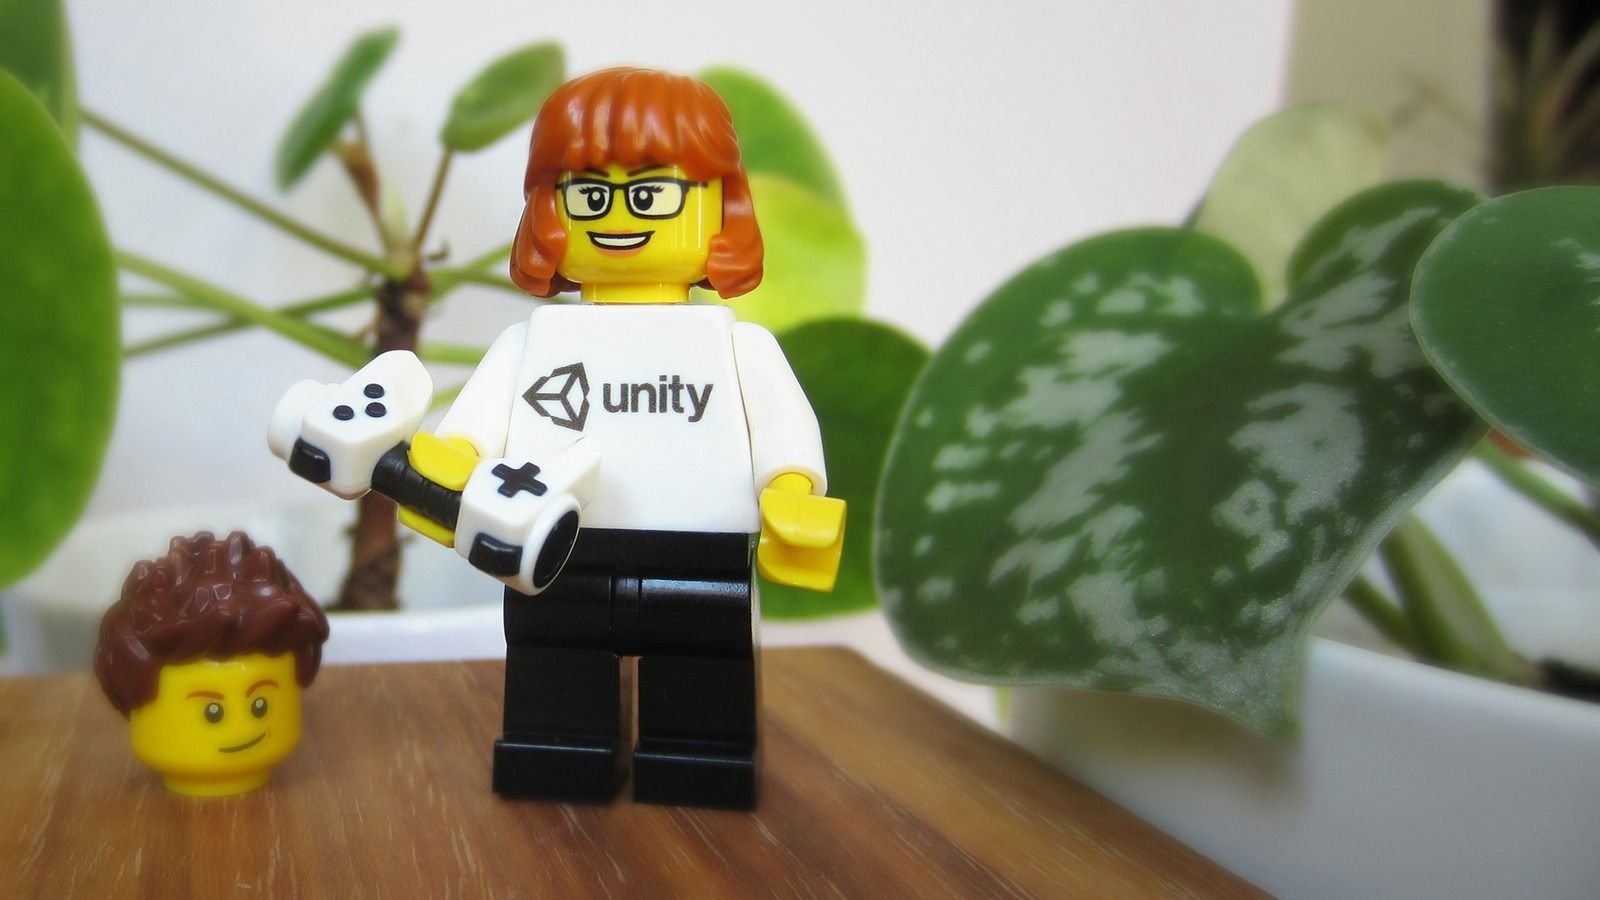 A custom LEGO minifig wearing a Unity-branded shirt.